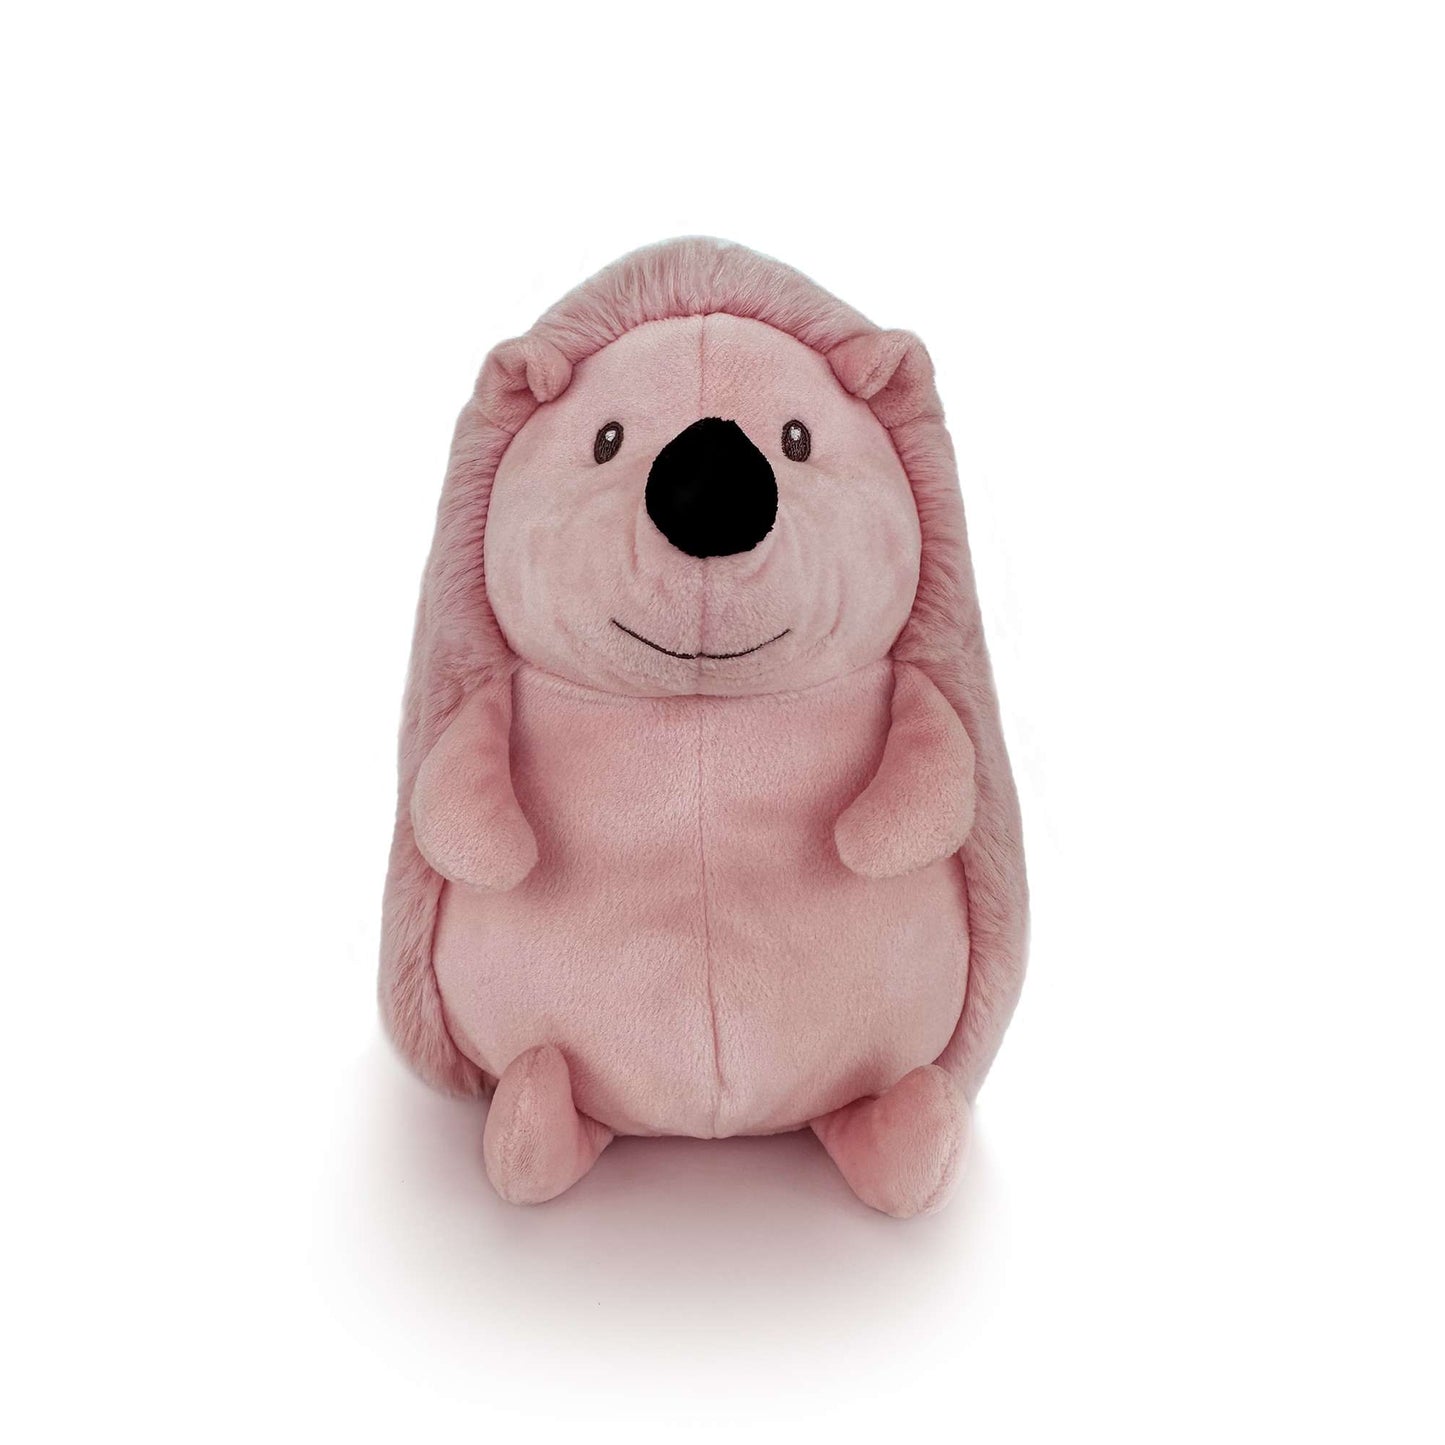 Cute Pink Hedgehog Stuffed Animal